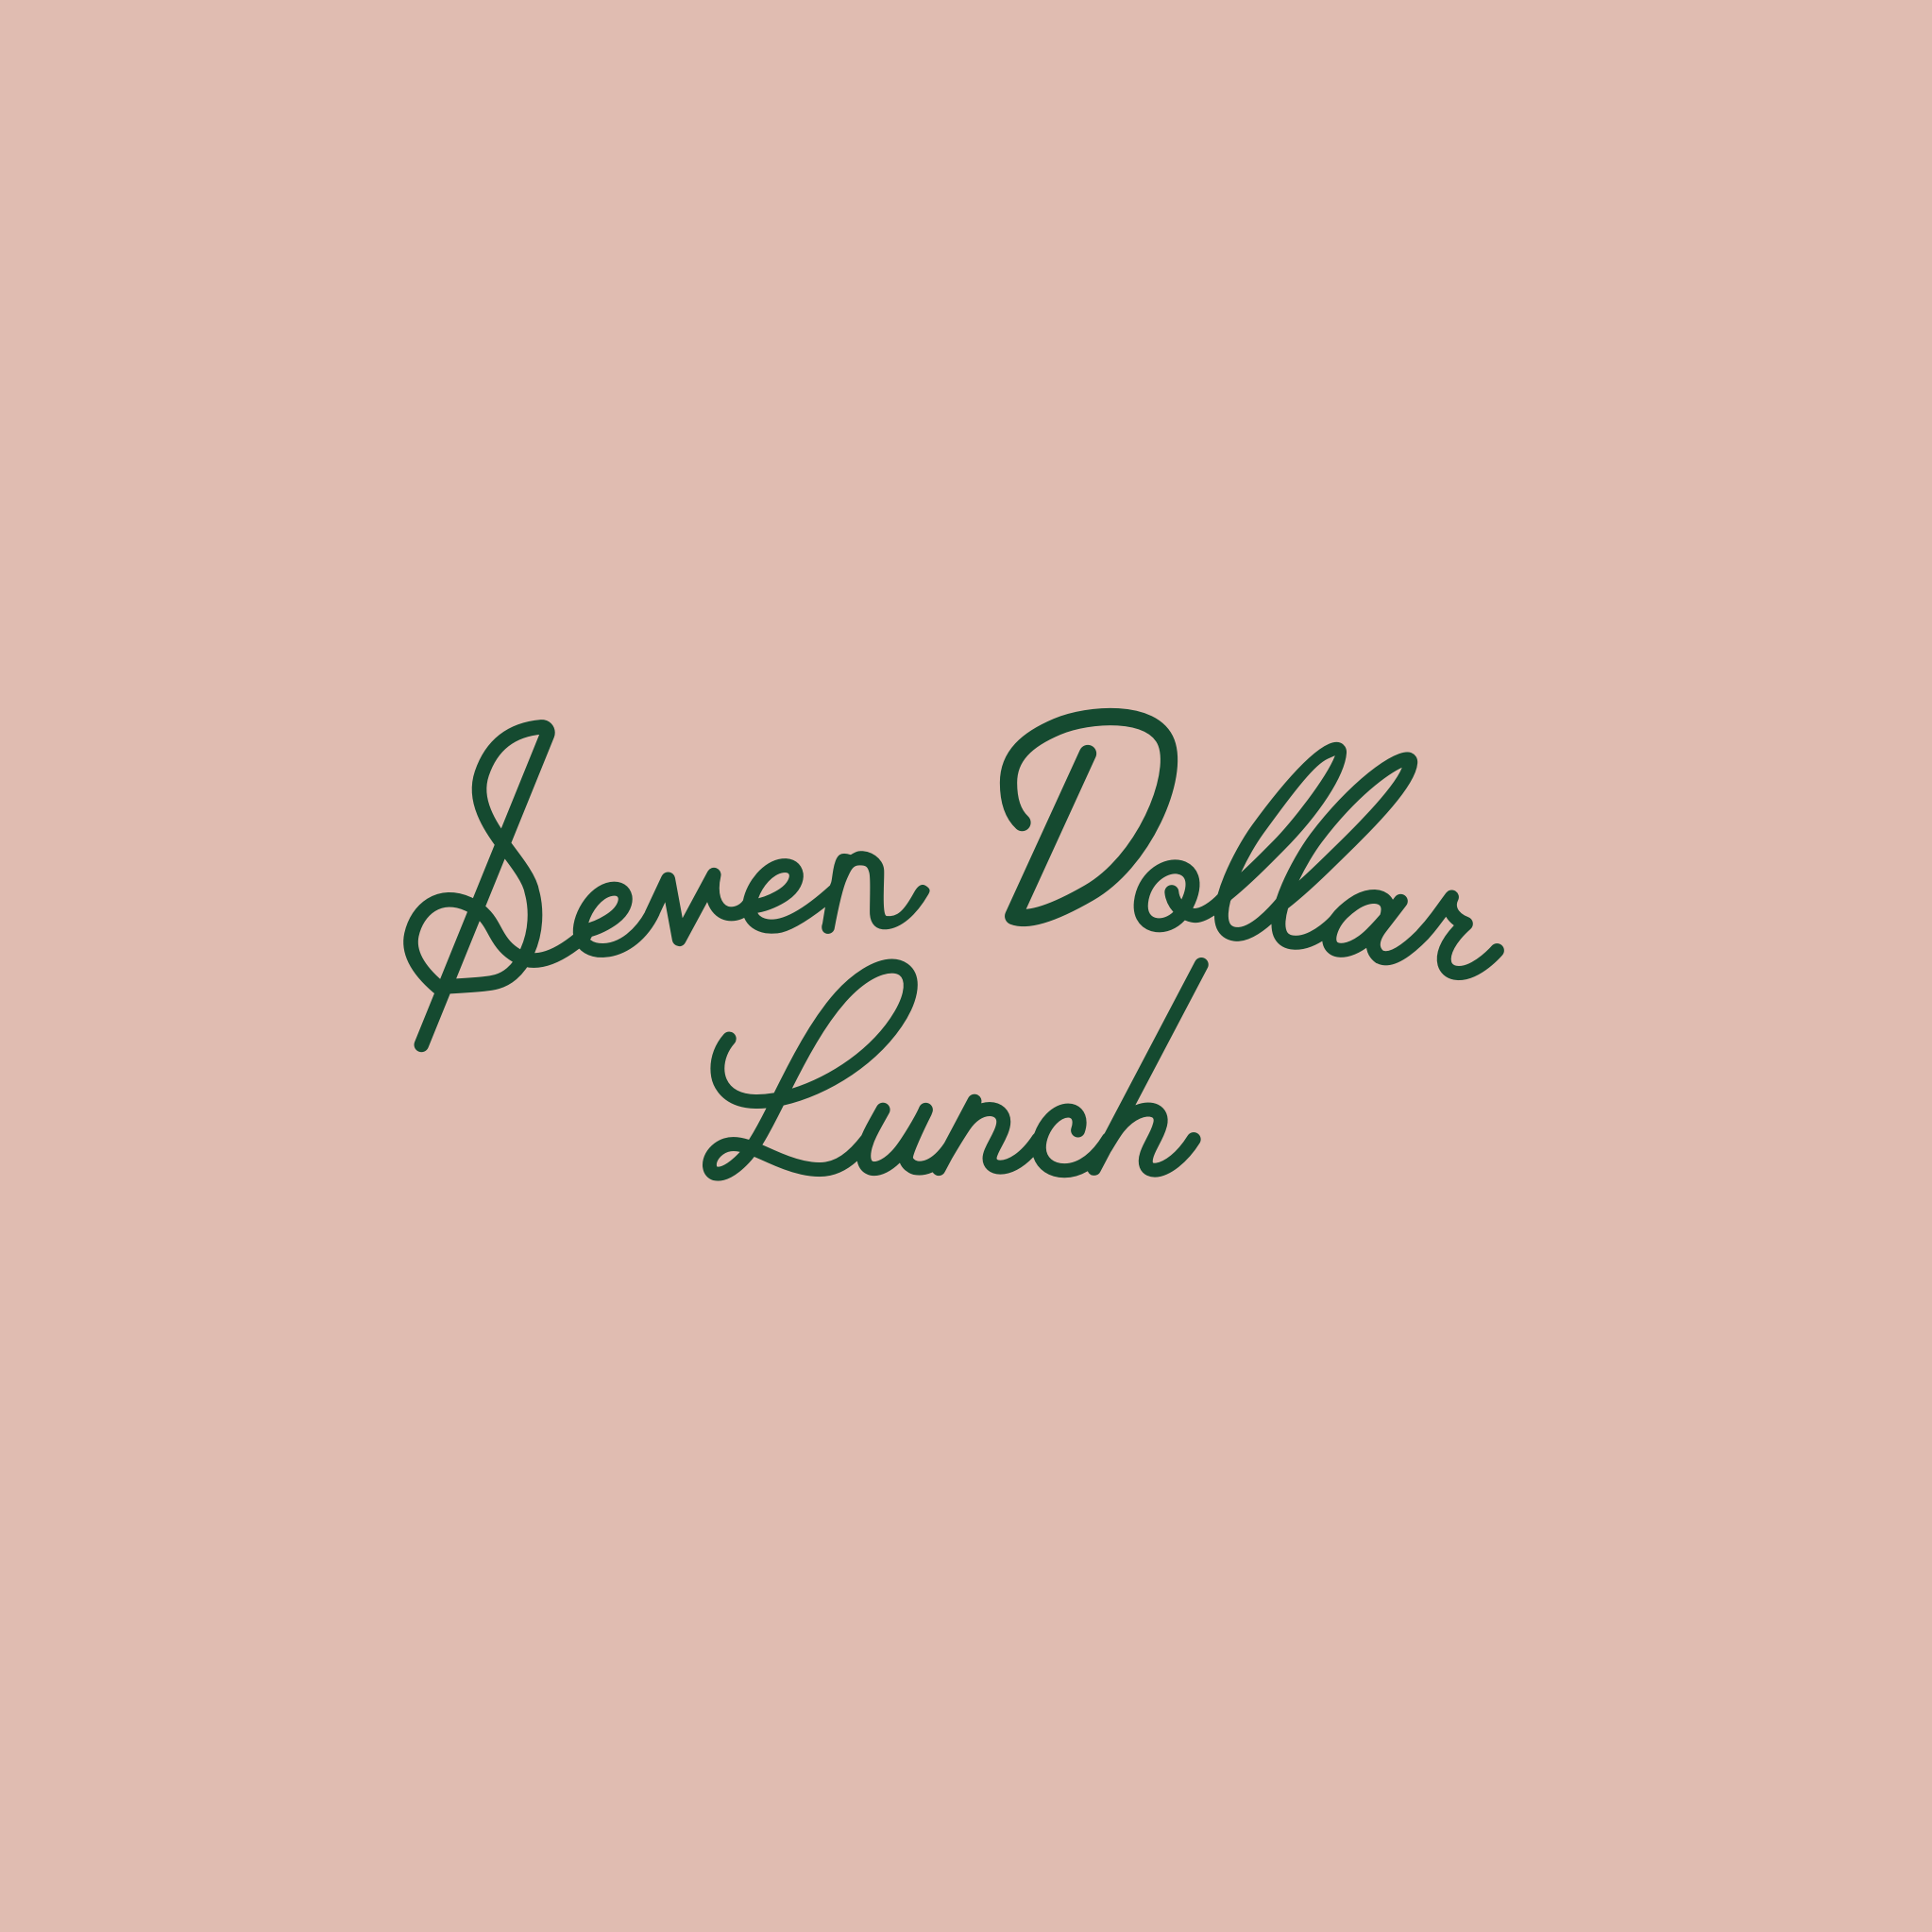 Seven Dollar Lunch: AIX